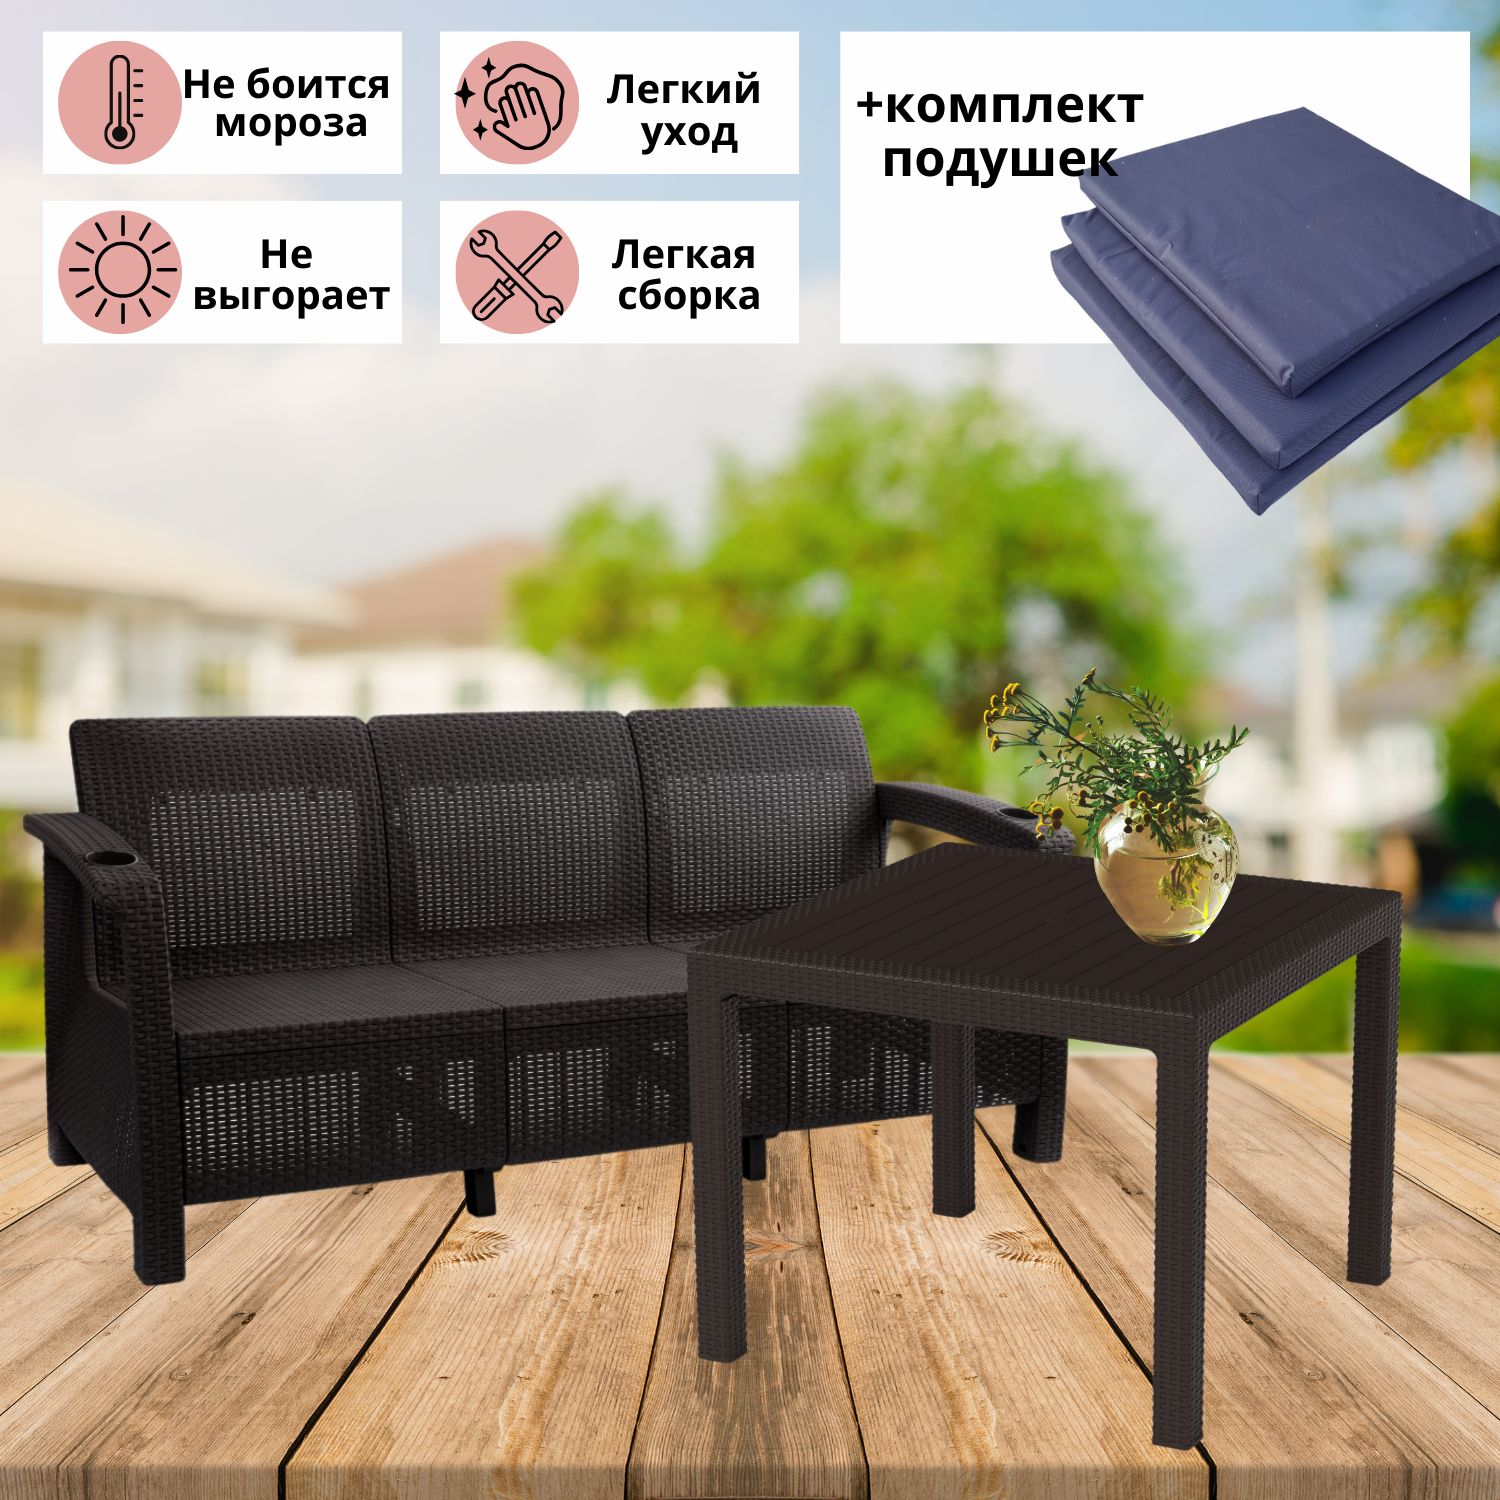 Комплект мебели для дачи с подушками Альтернатива Фазенда-3 RT0443 диван и обеденный стол